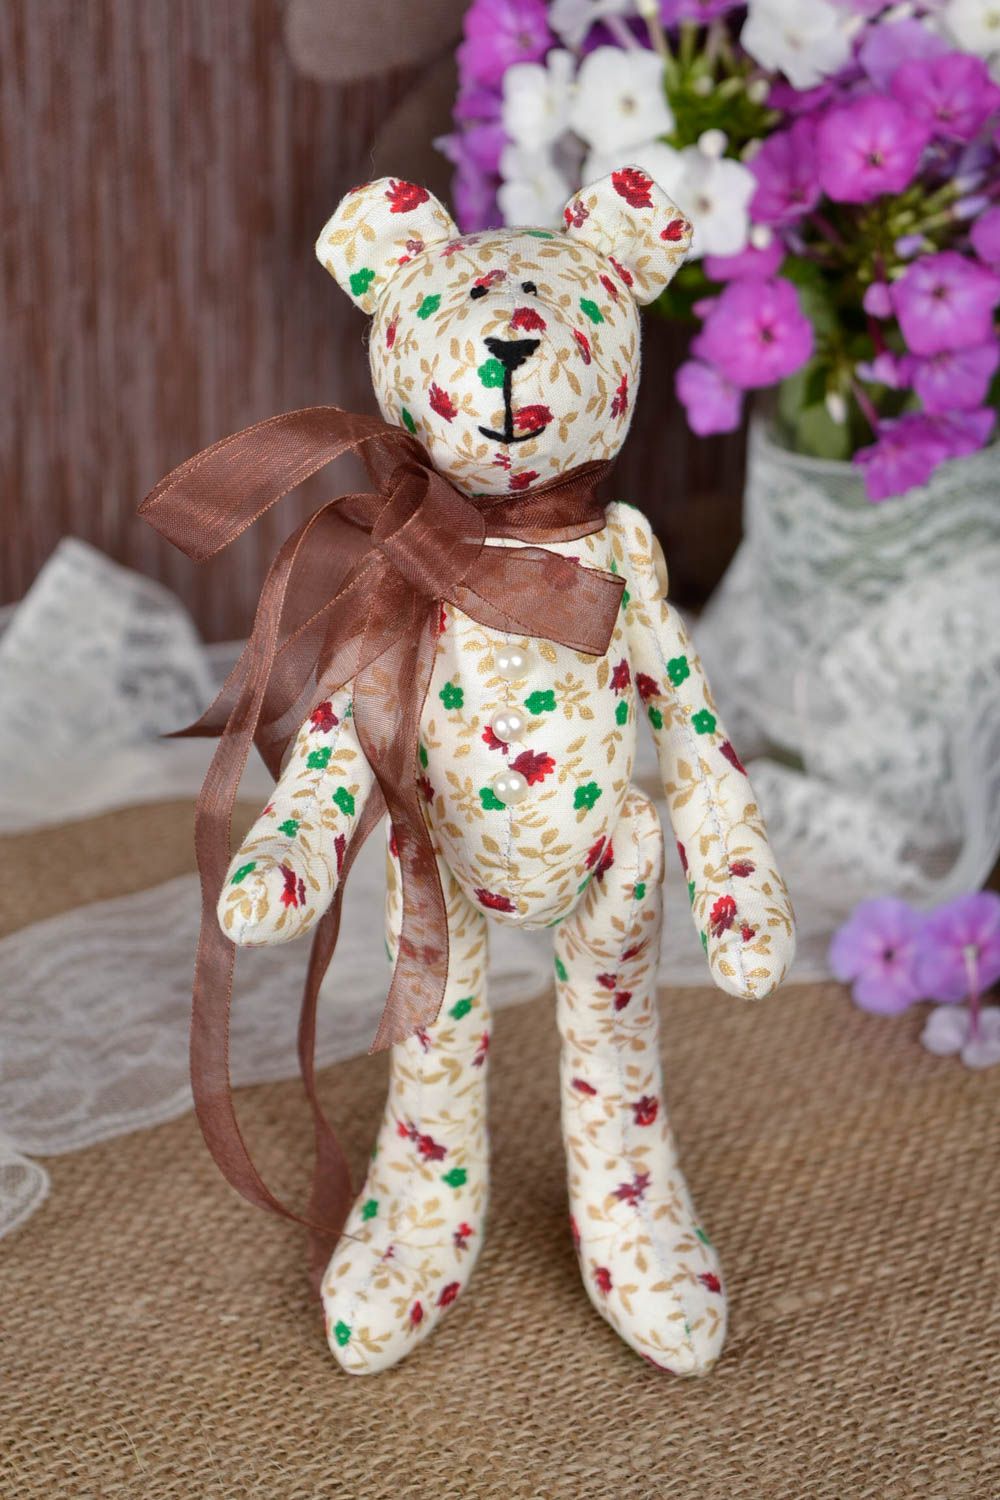 Bear toy soft toy handmade toy gifts for children nursery decor designer toys photo 1